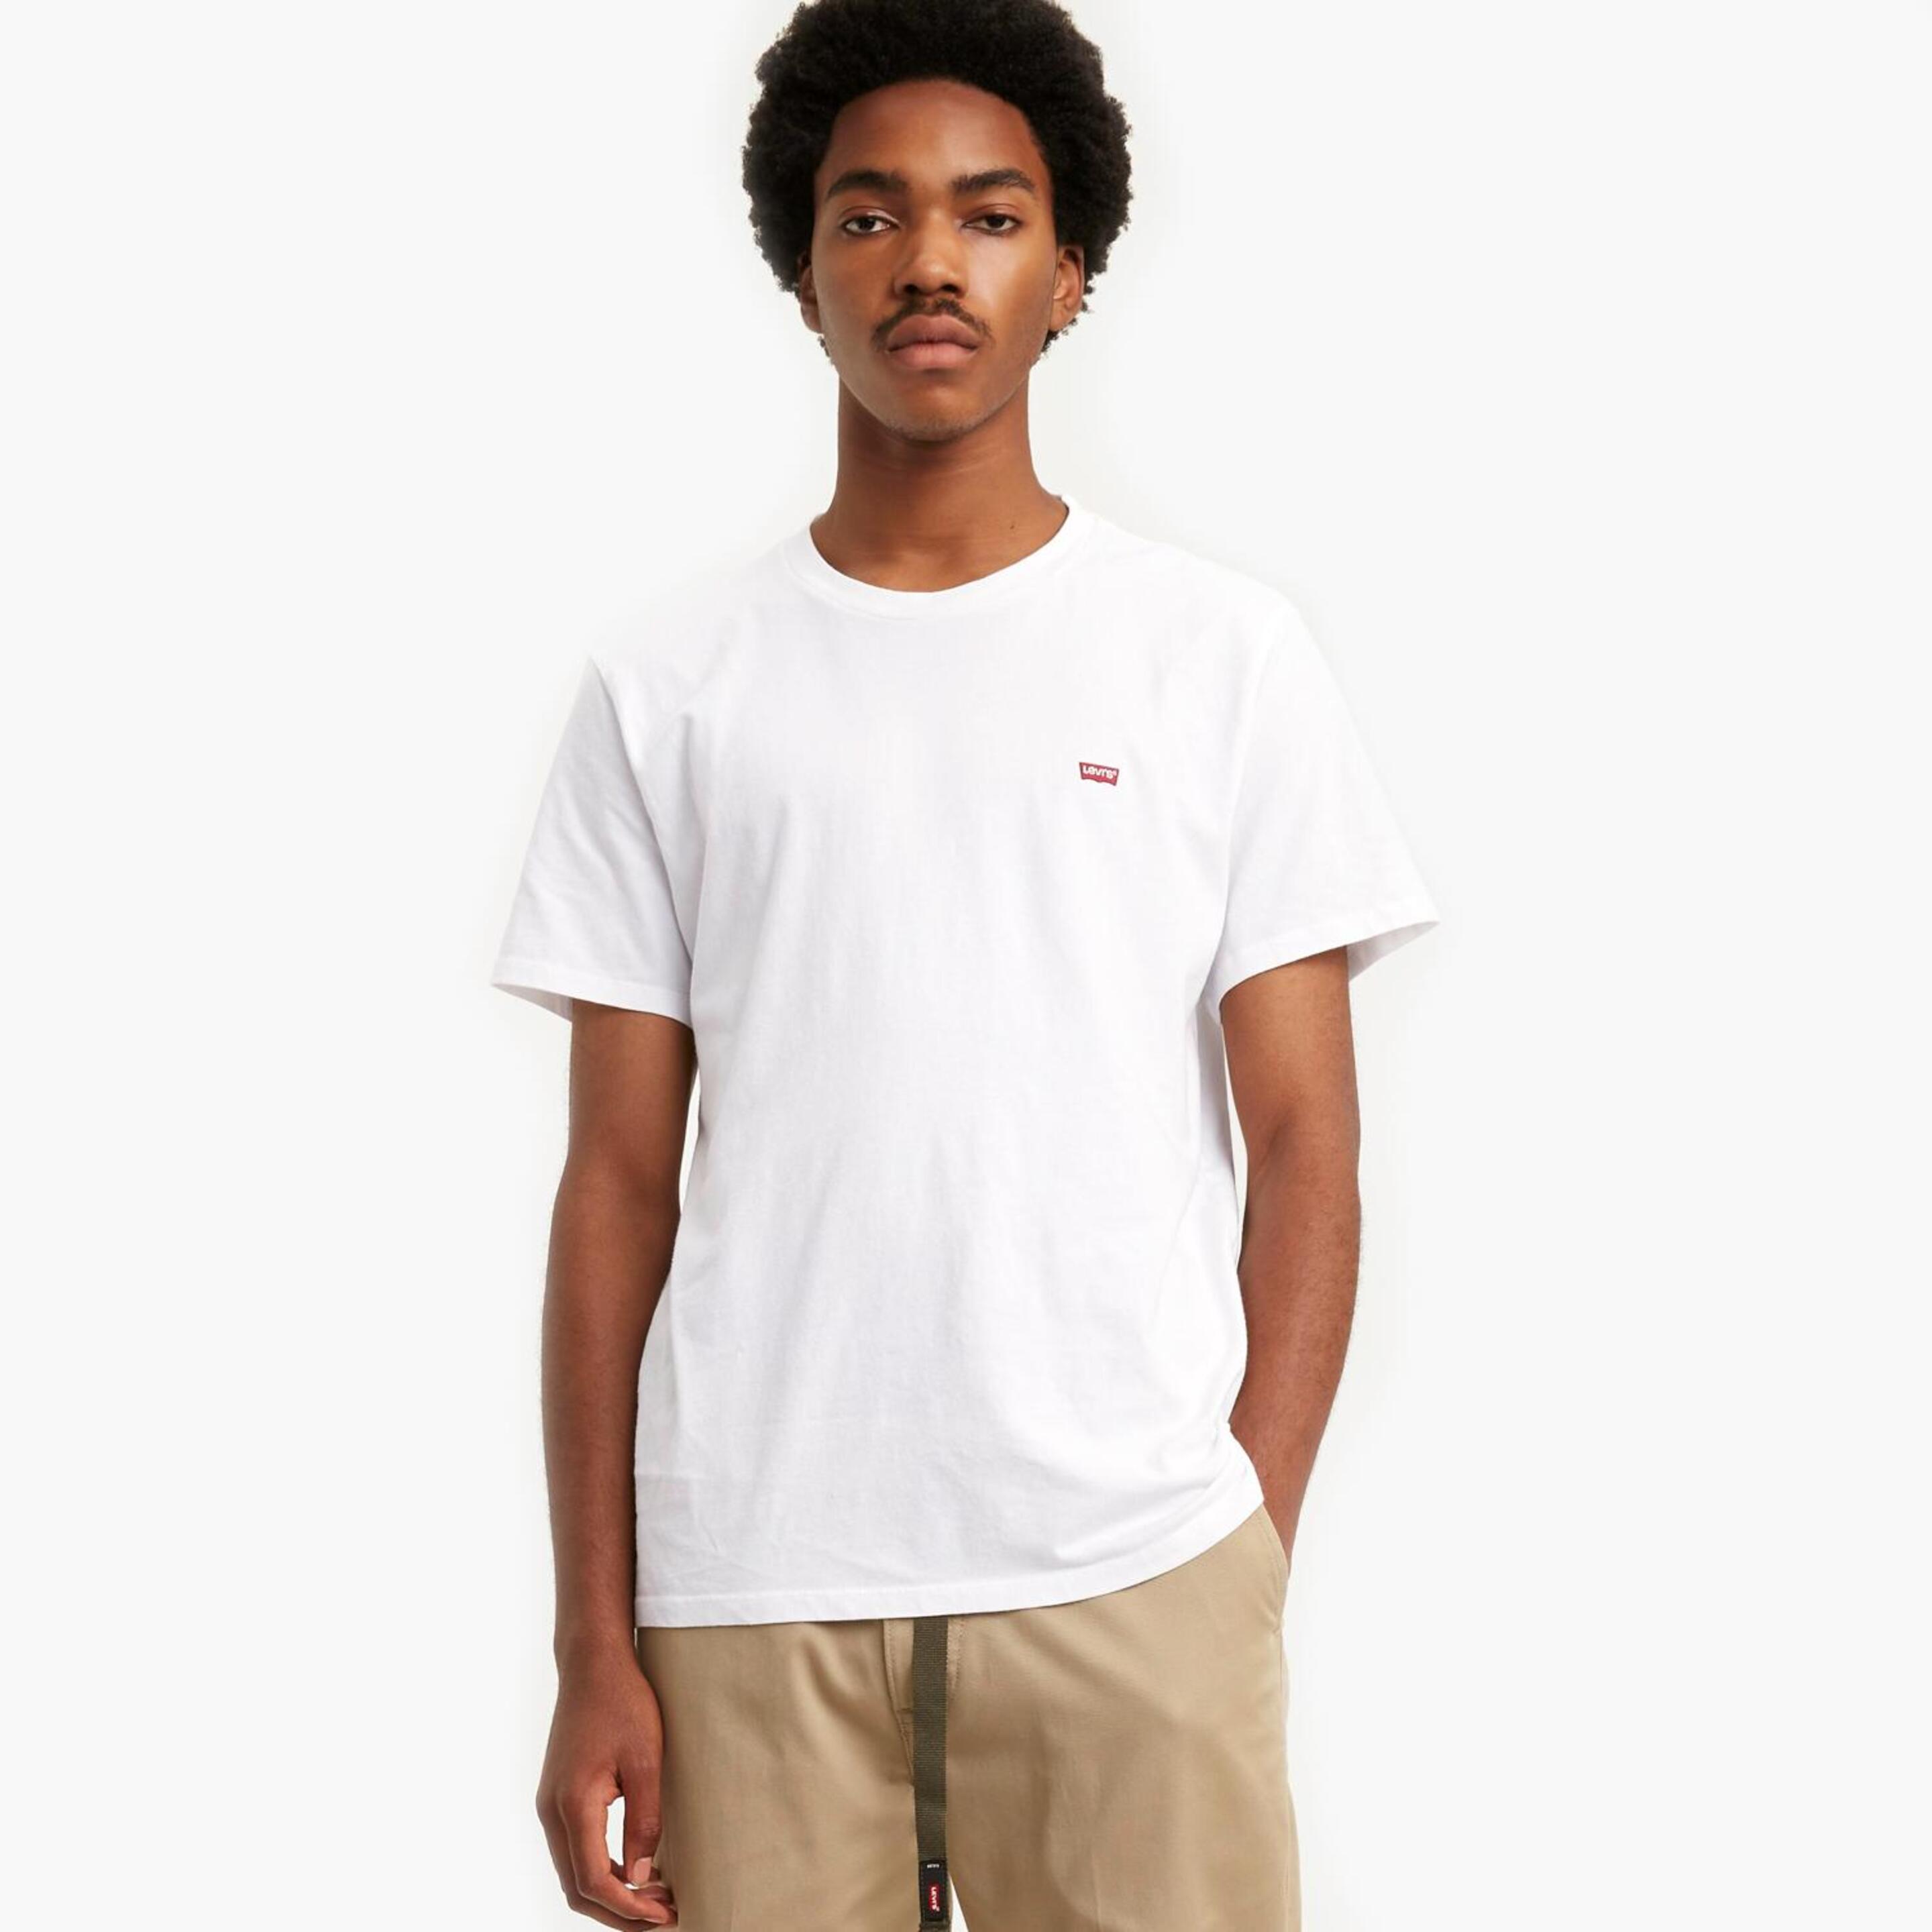 Levi's The Original - blanco - Camiseta Hombre